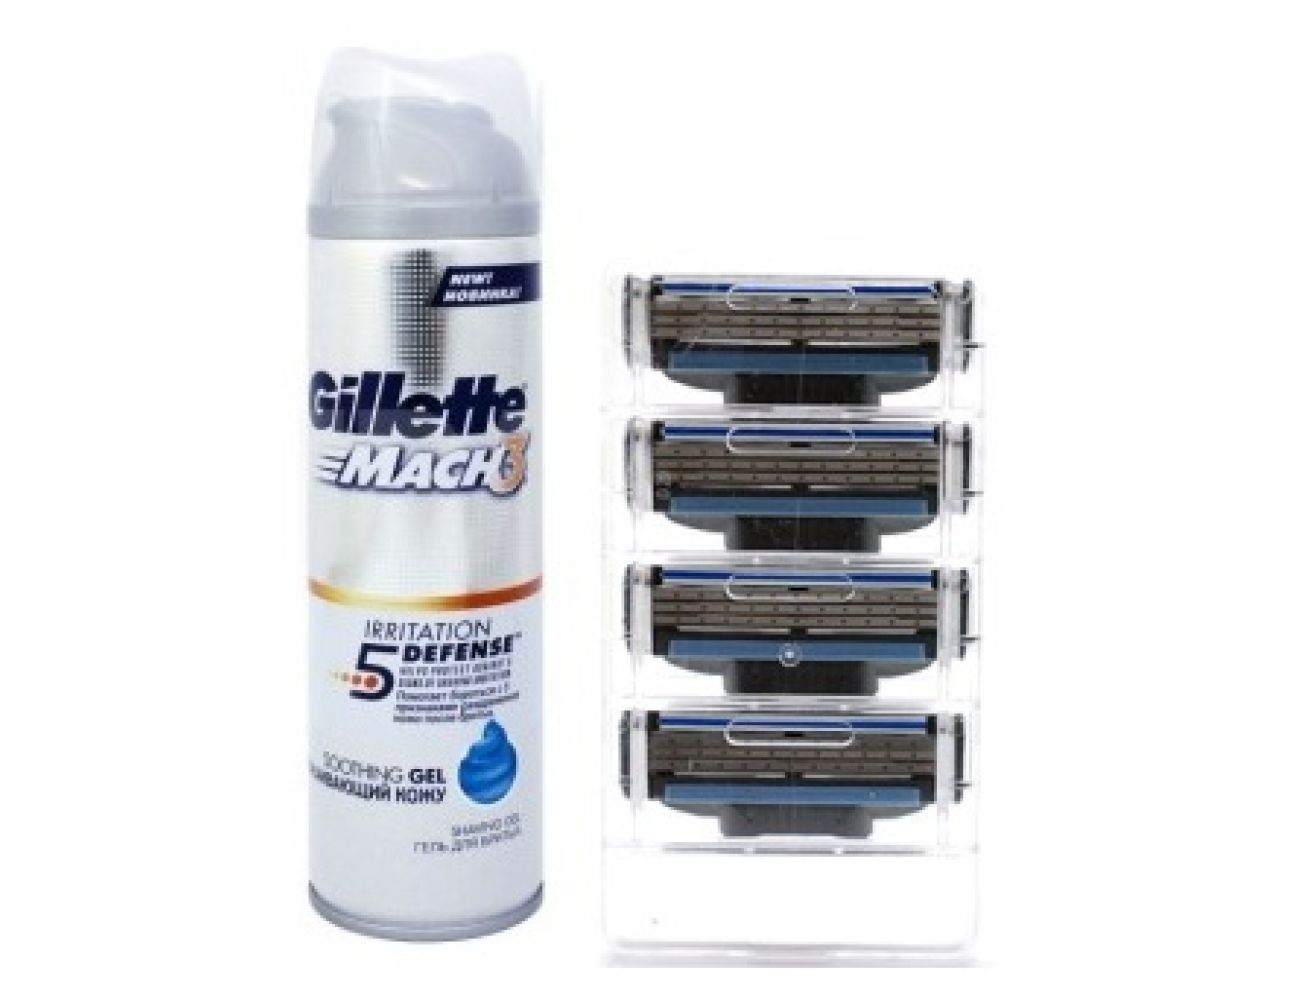 Gillette Mach3 лезвия для бритвы 4 шт.+ подарок гель д/б 75мл 4210201119180